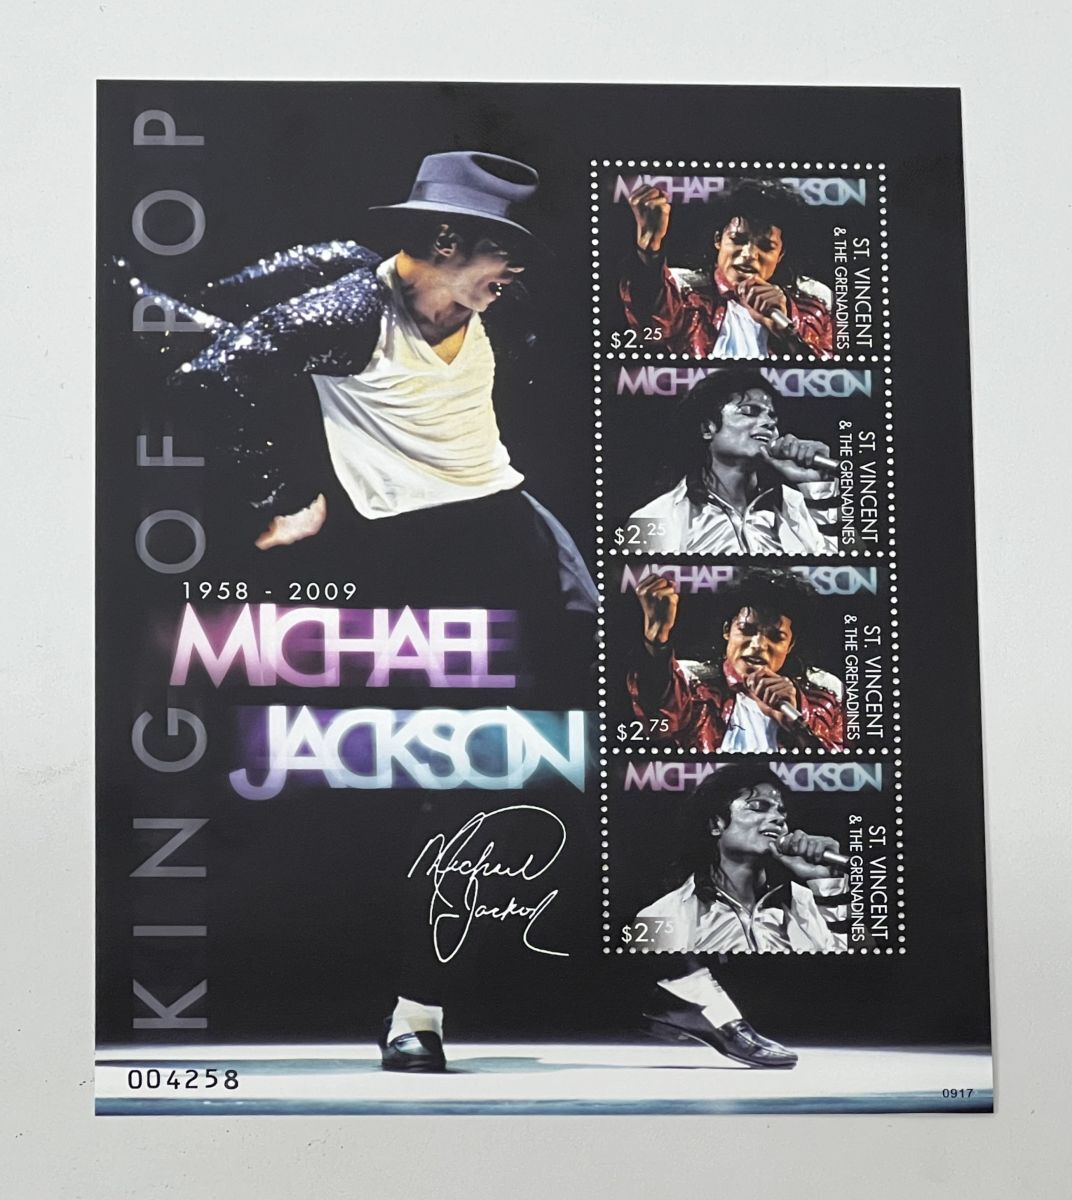  stamp / unused / face value $10 / 1958-2009 MAICHAEL JACKSON Michael * Jackson / $2.25 $2.75[Z001]